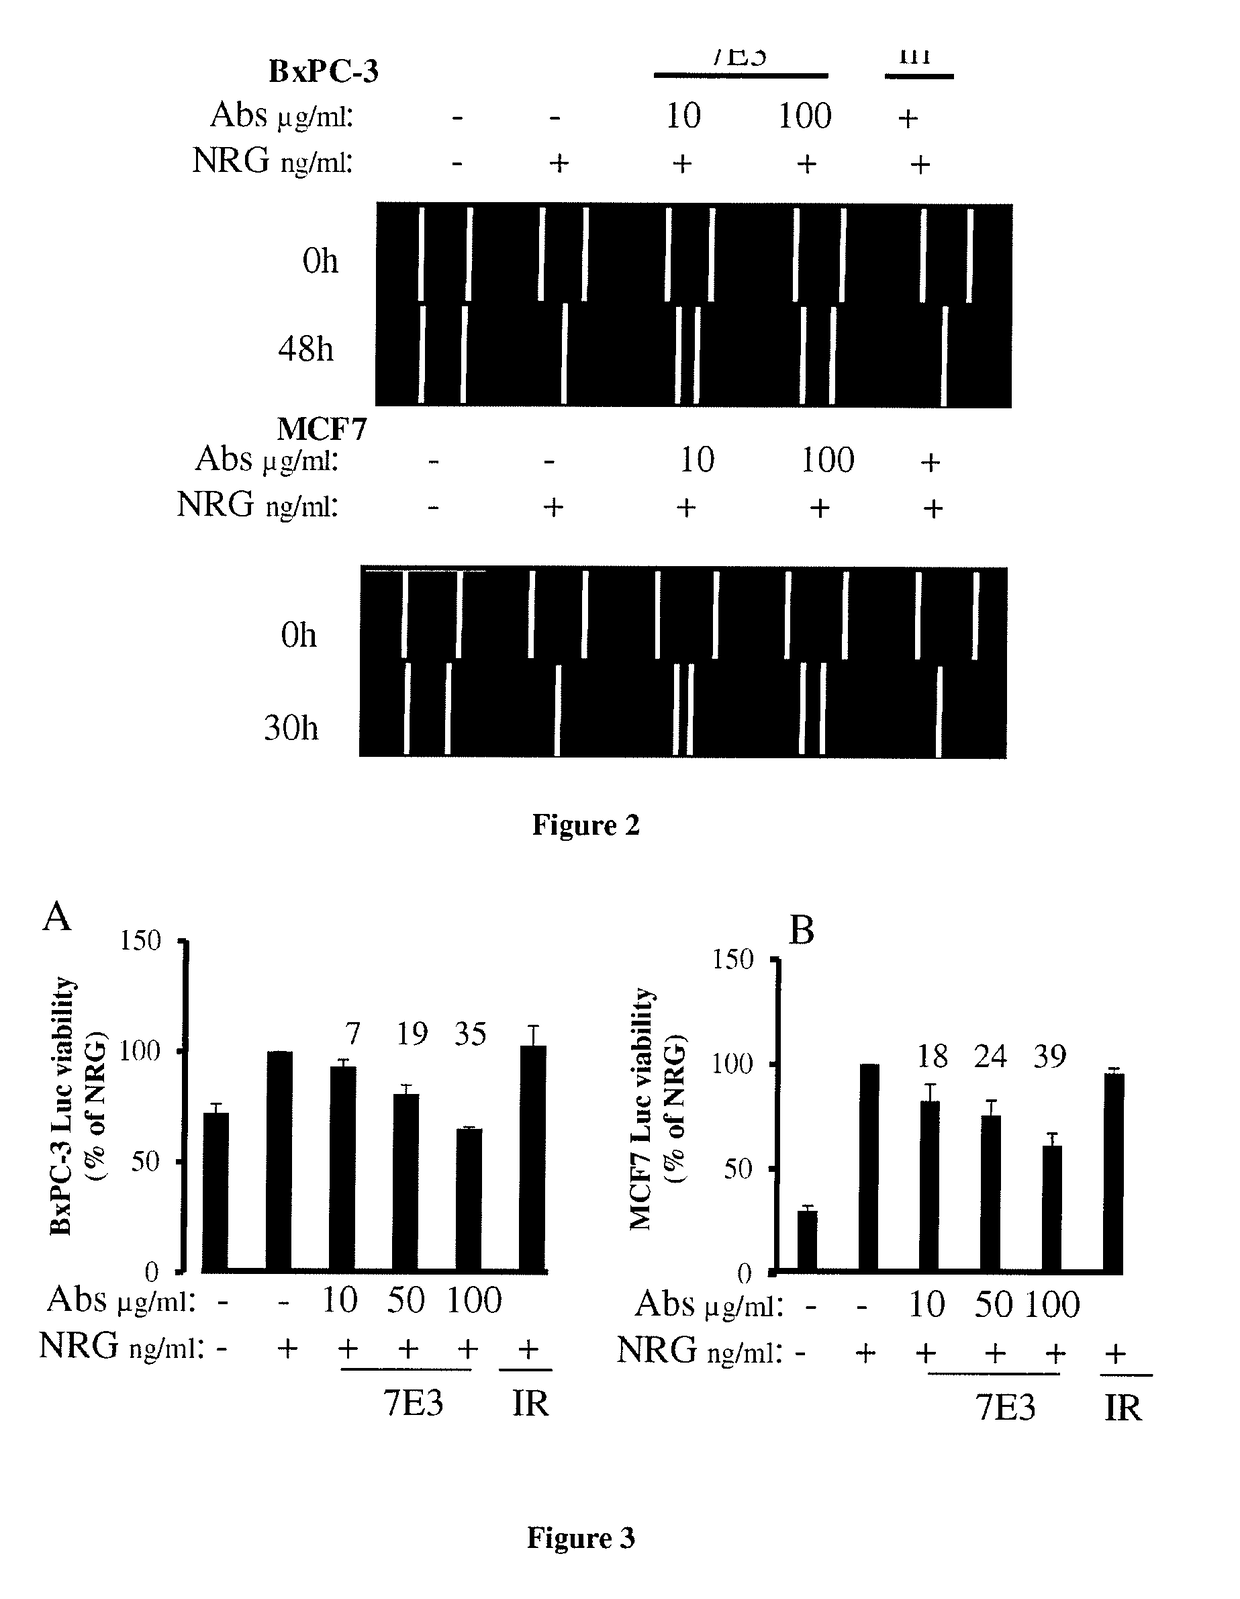 Anti-nrg1 (heregulin) antibodies and uses thereof